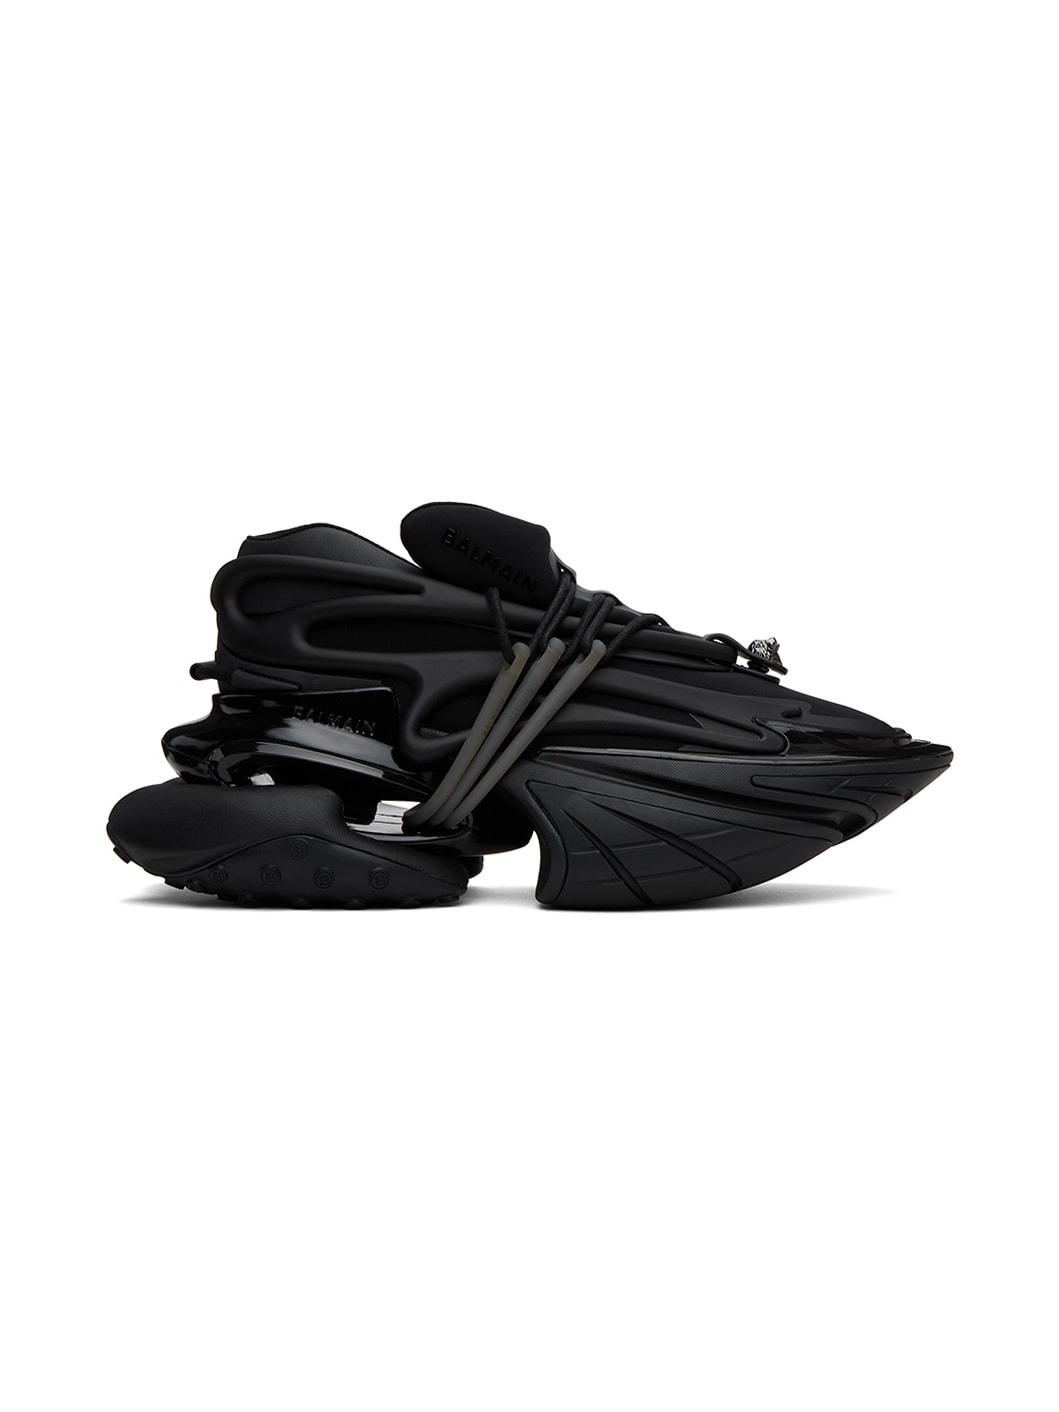 Black Unicorn Sneakers - 1